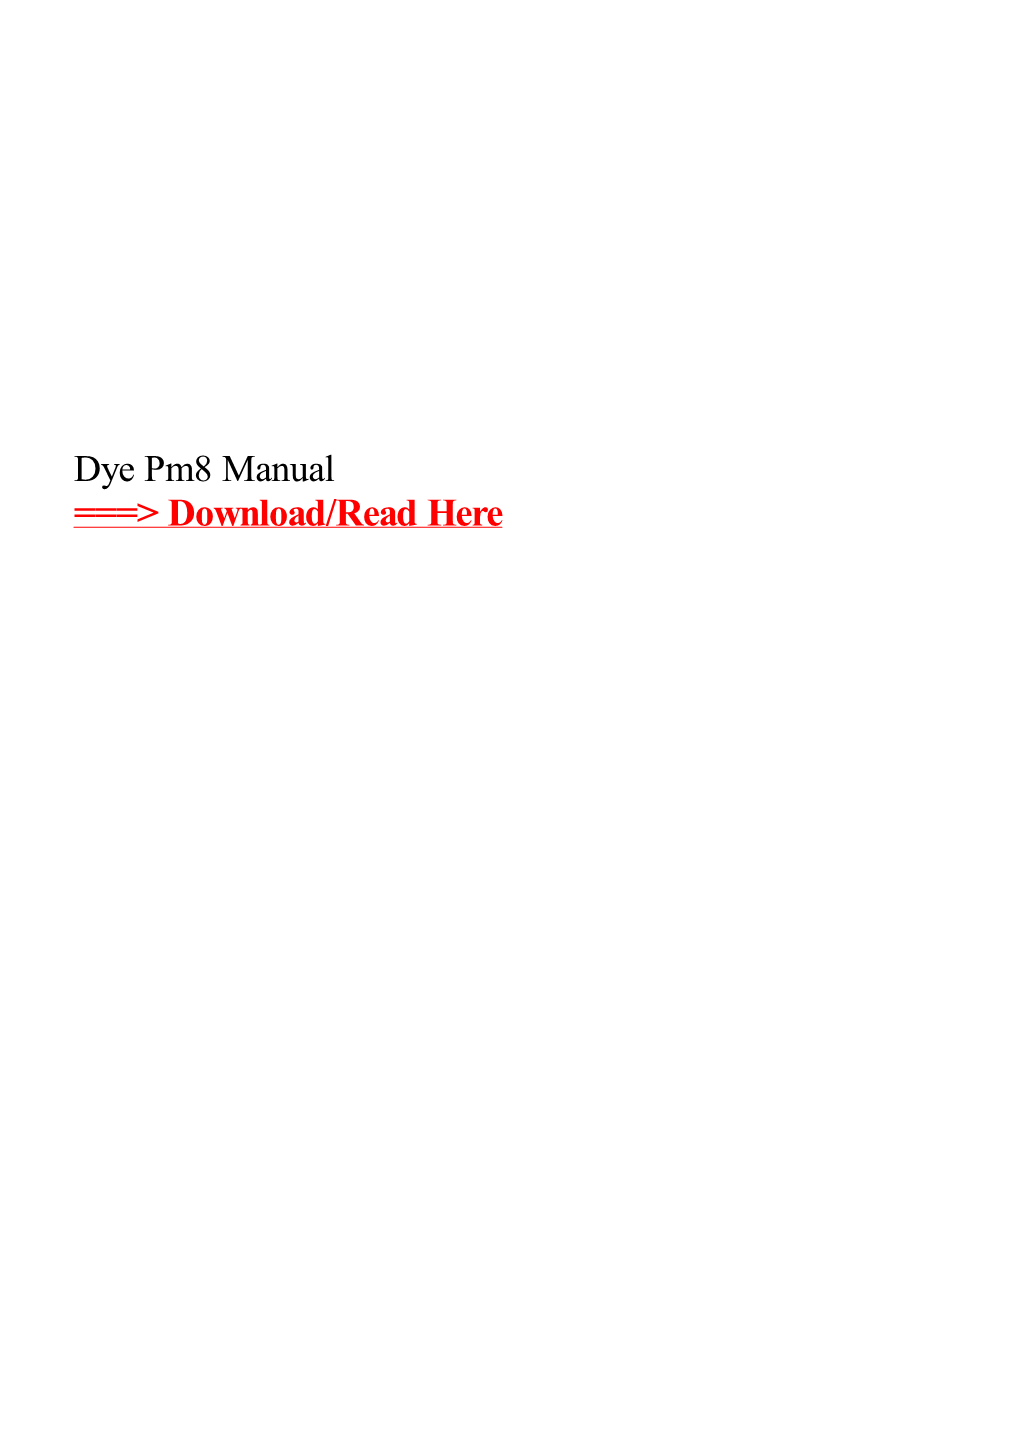 Dye Pm8 Manual Voke System: ----Click to View / Download MARKER MANUALS DYE M3+ Download PM7 Manual: ----Click to View / Download PM8 Manual: ----Click to View